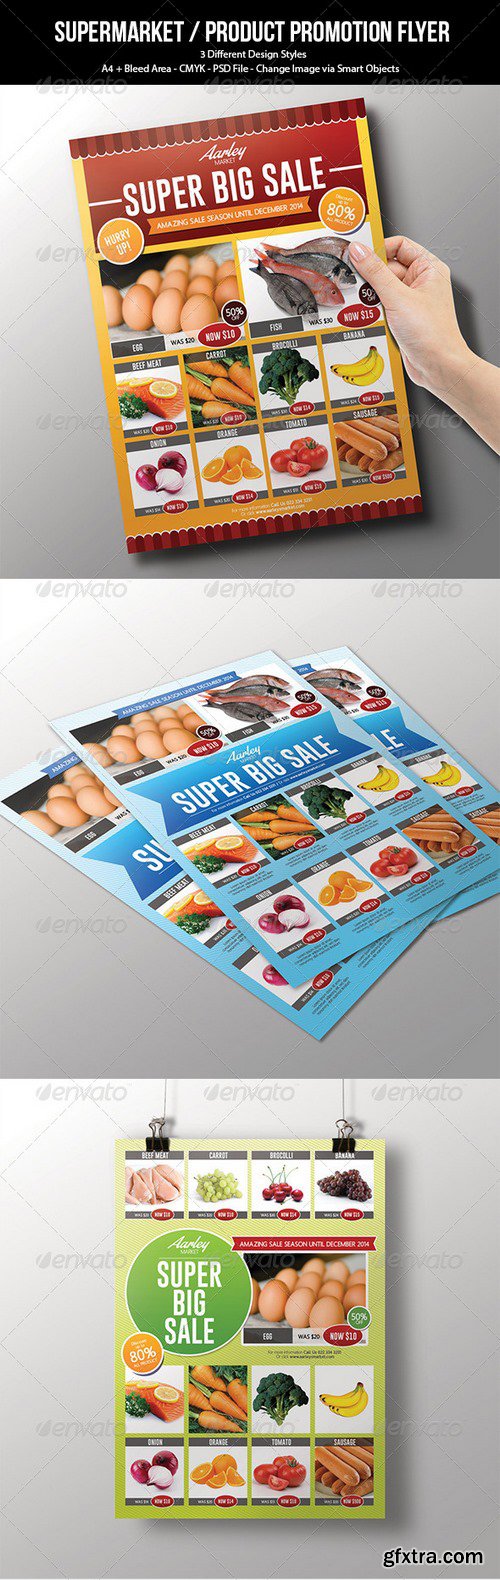 Graphicriver - Supermarket / Product Promotion Flyer 7245418